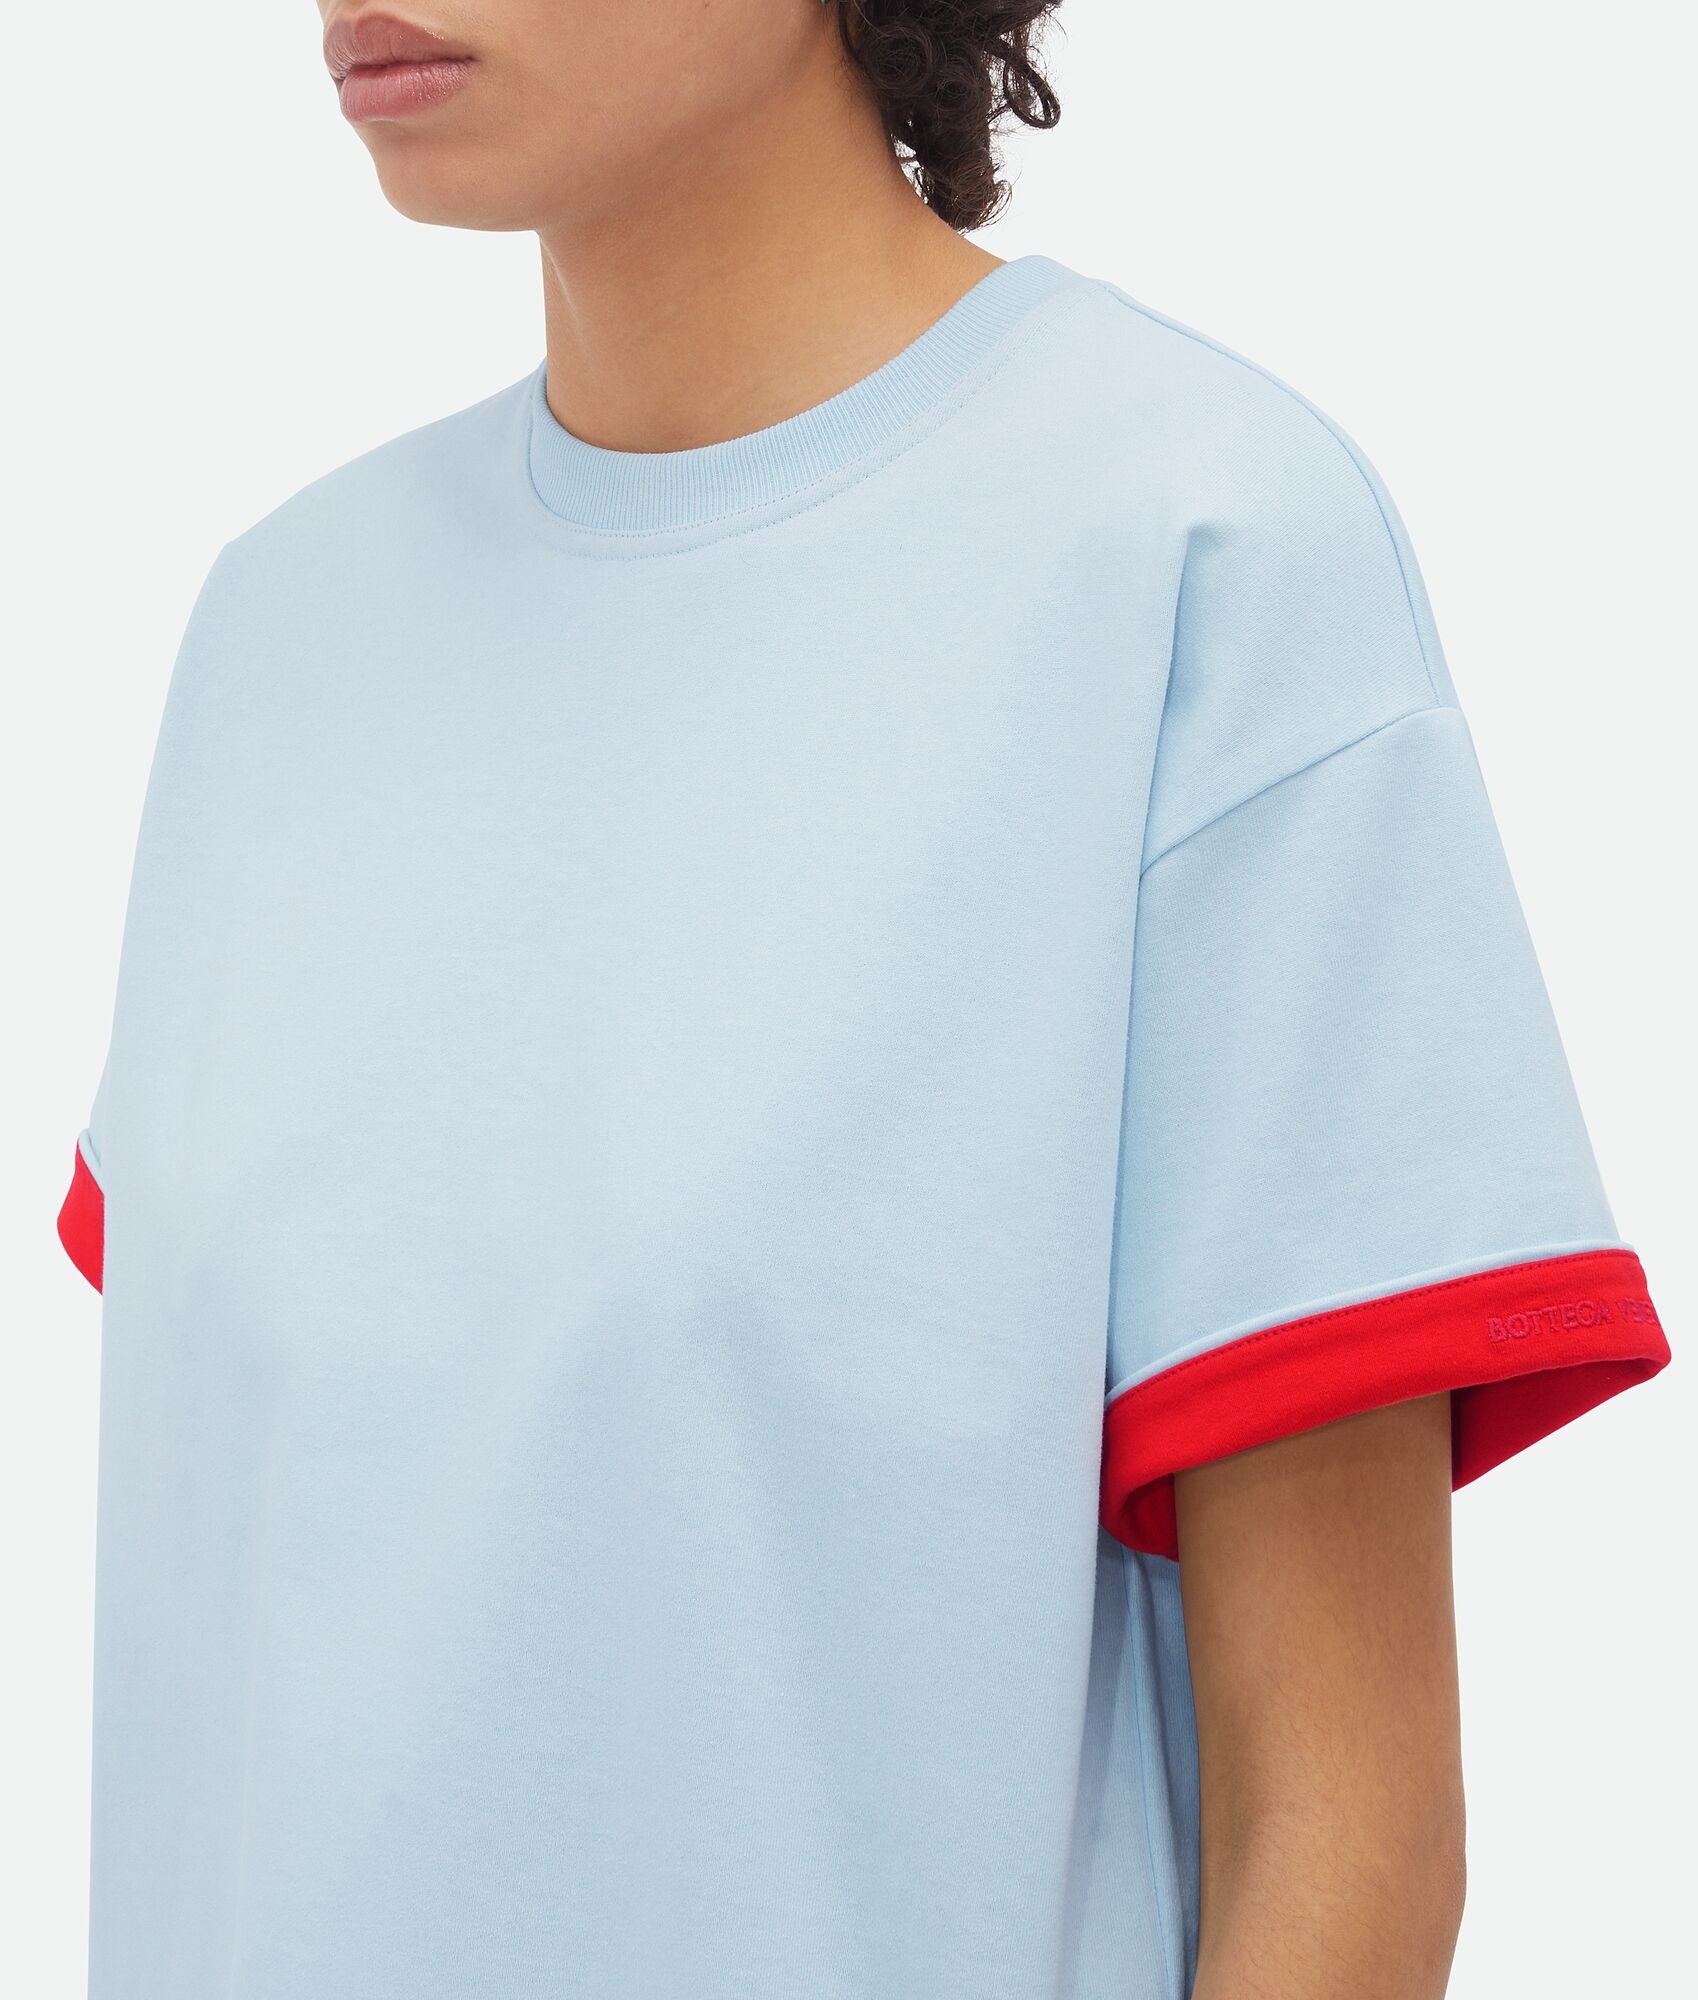 Double Layer Cotton T-Shirt - 4